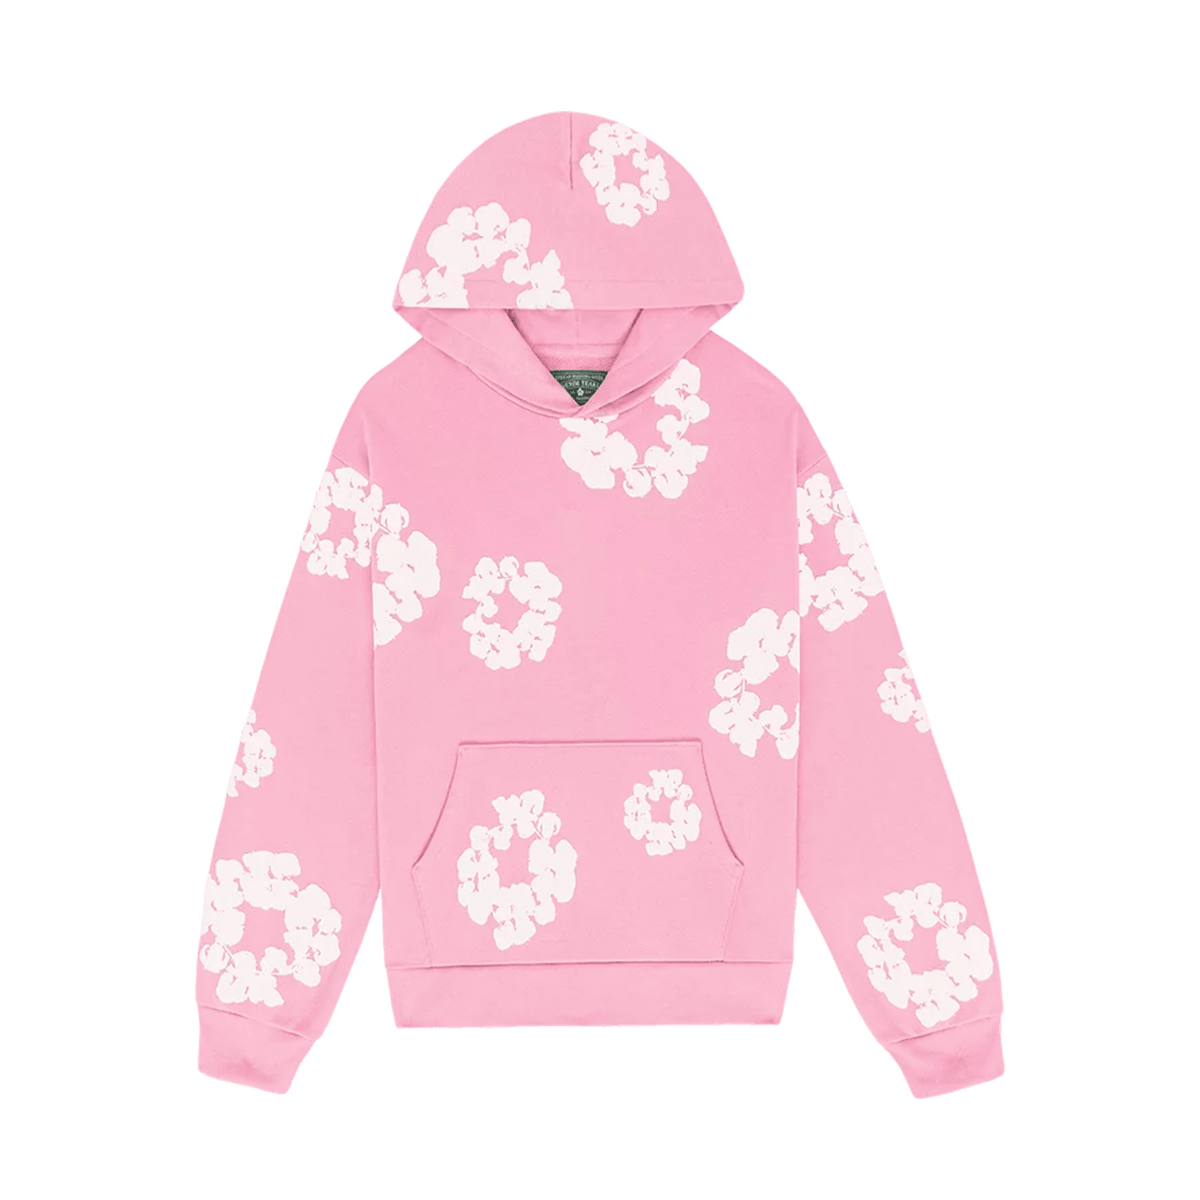 Denim Tears The Cotton Wreath Hooded Sweatshirt 'Pink' - JuzsportsShops